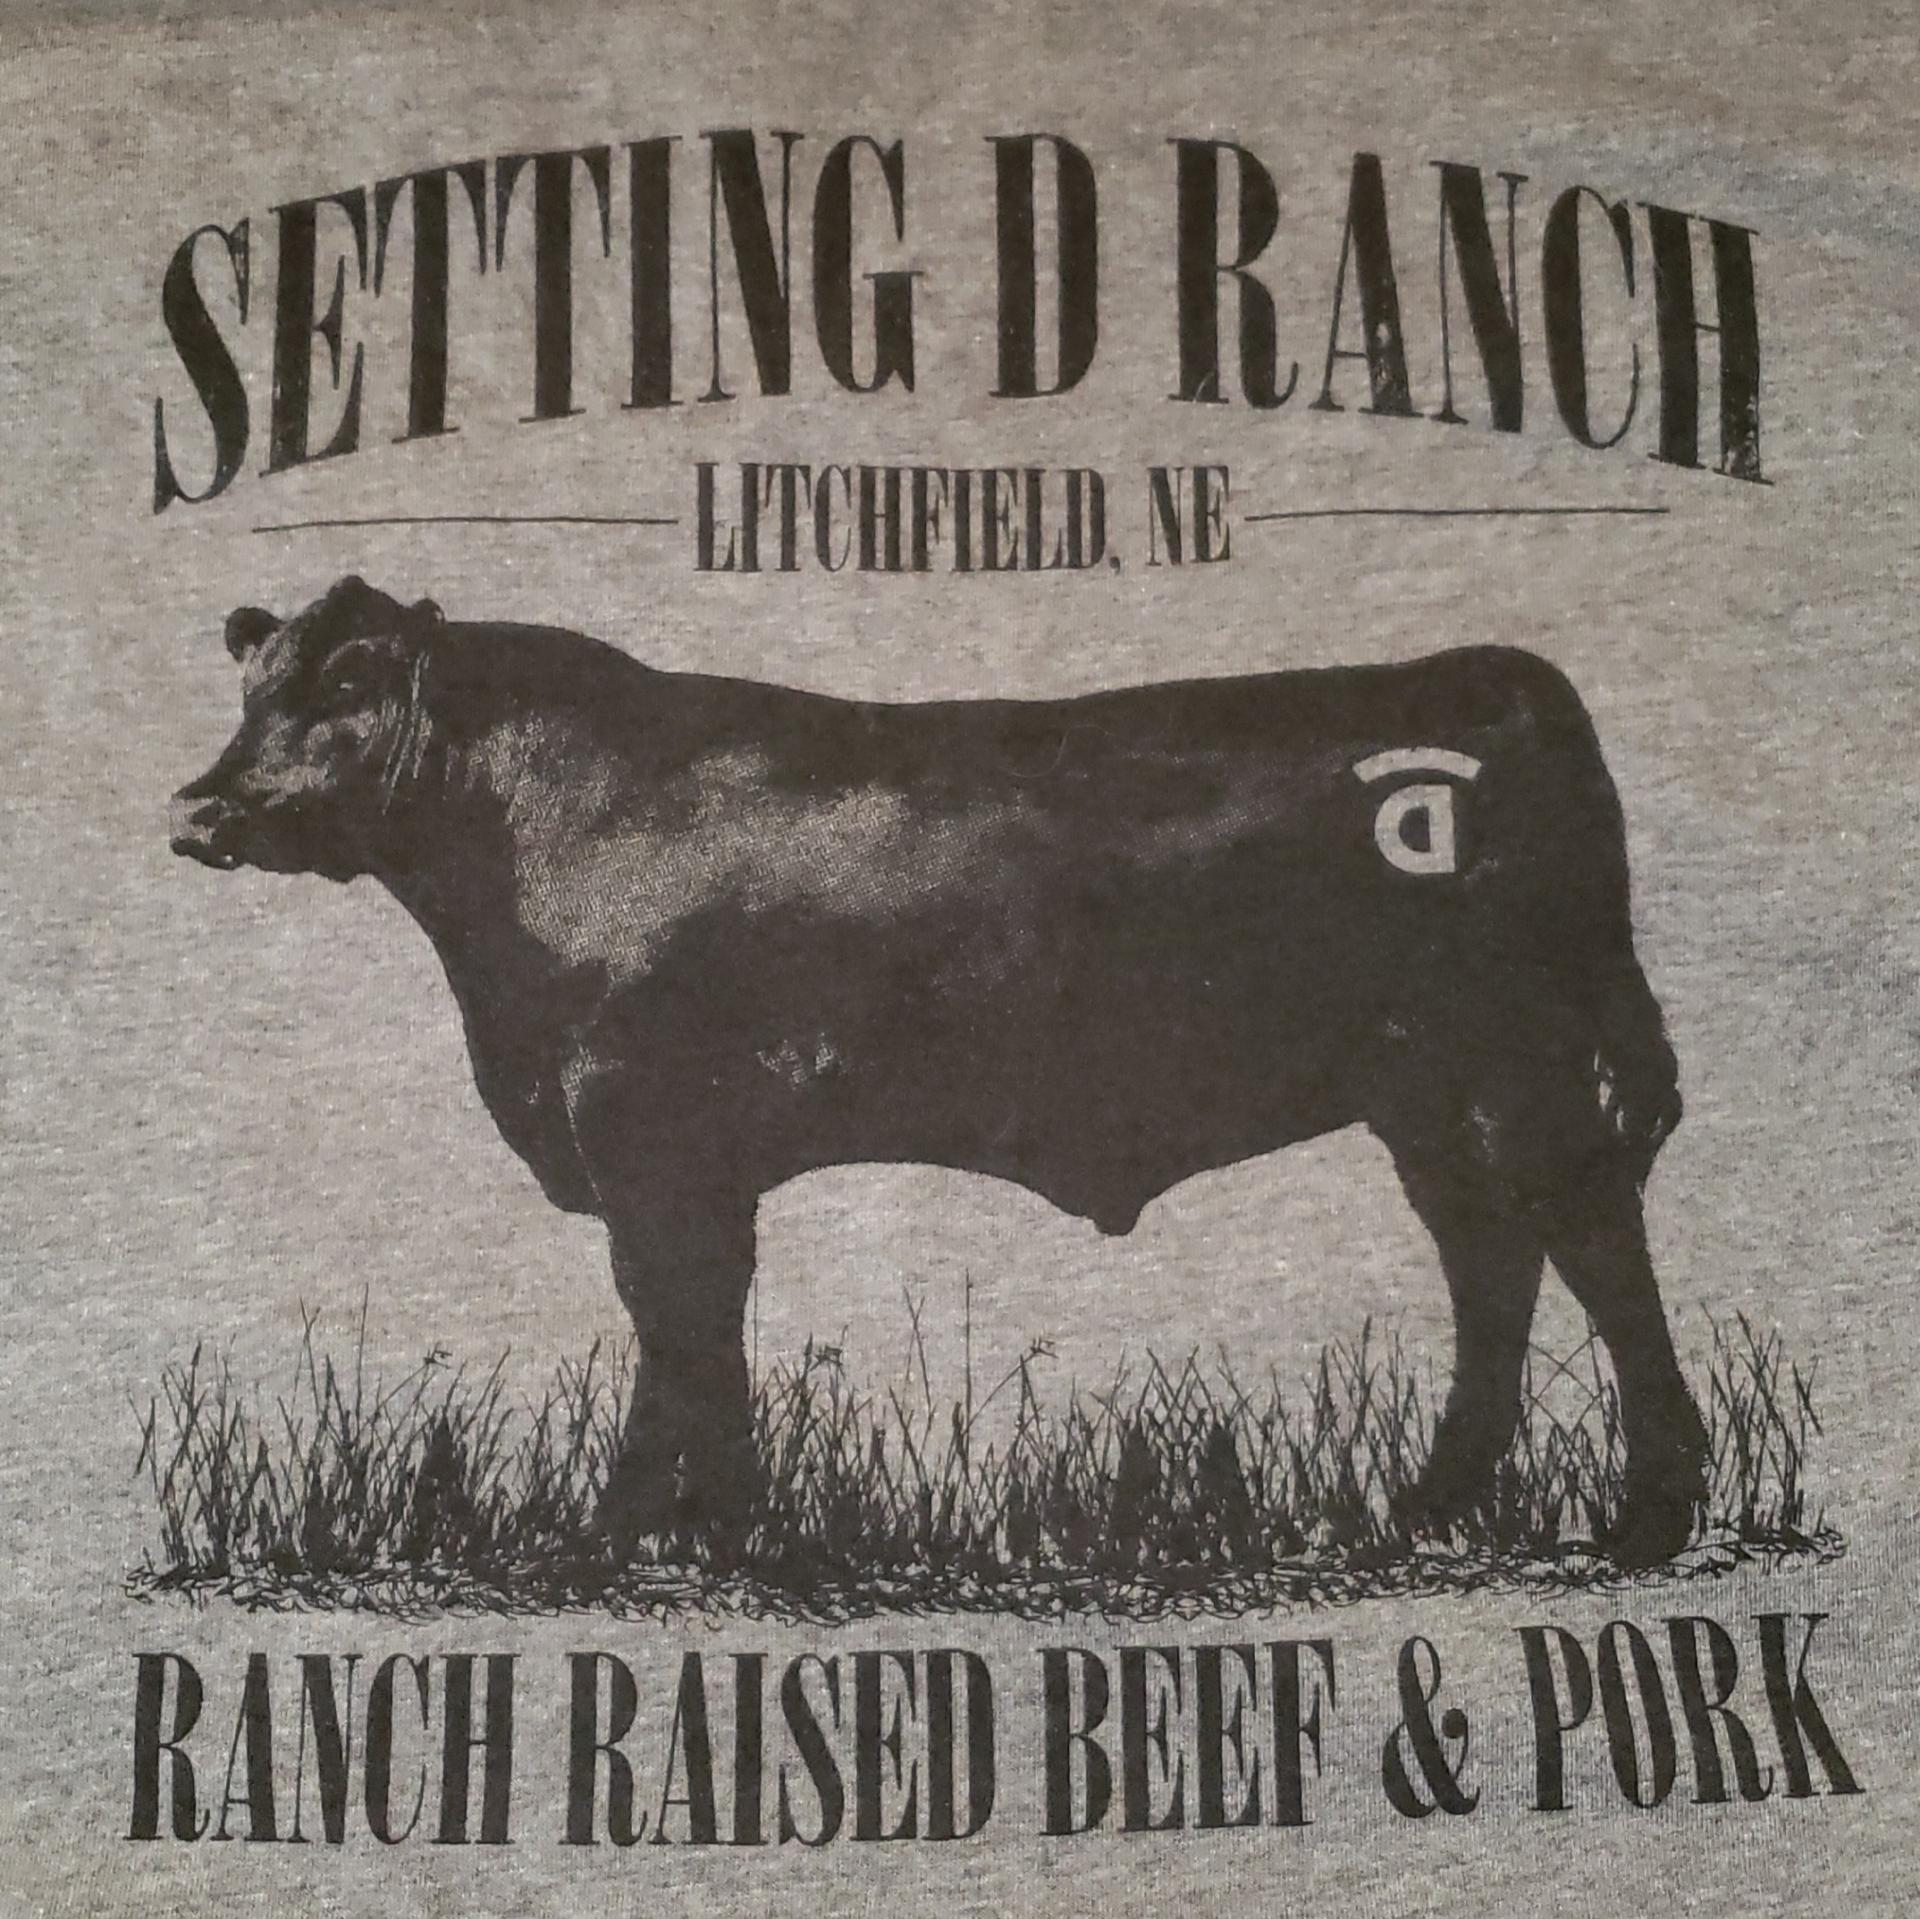 Setting D Ranch LLC  Logo